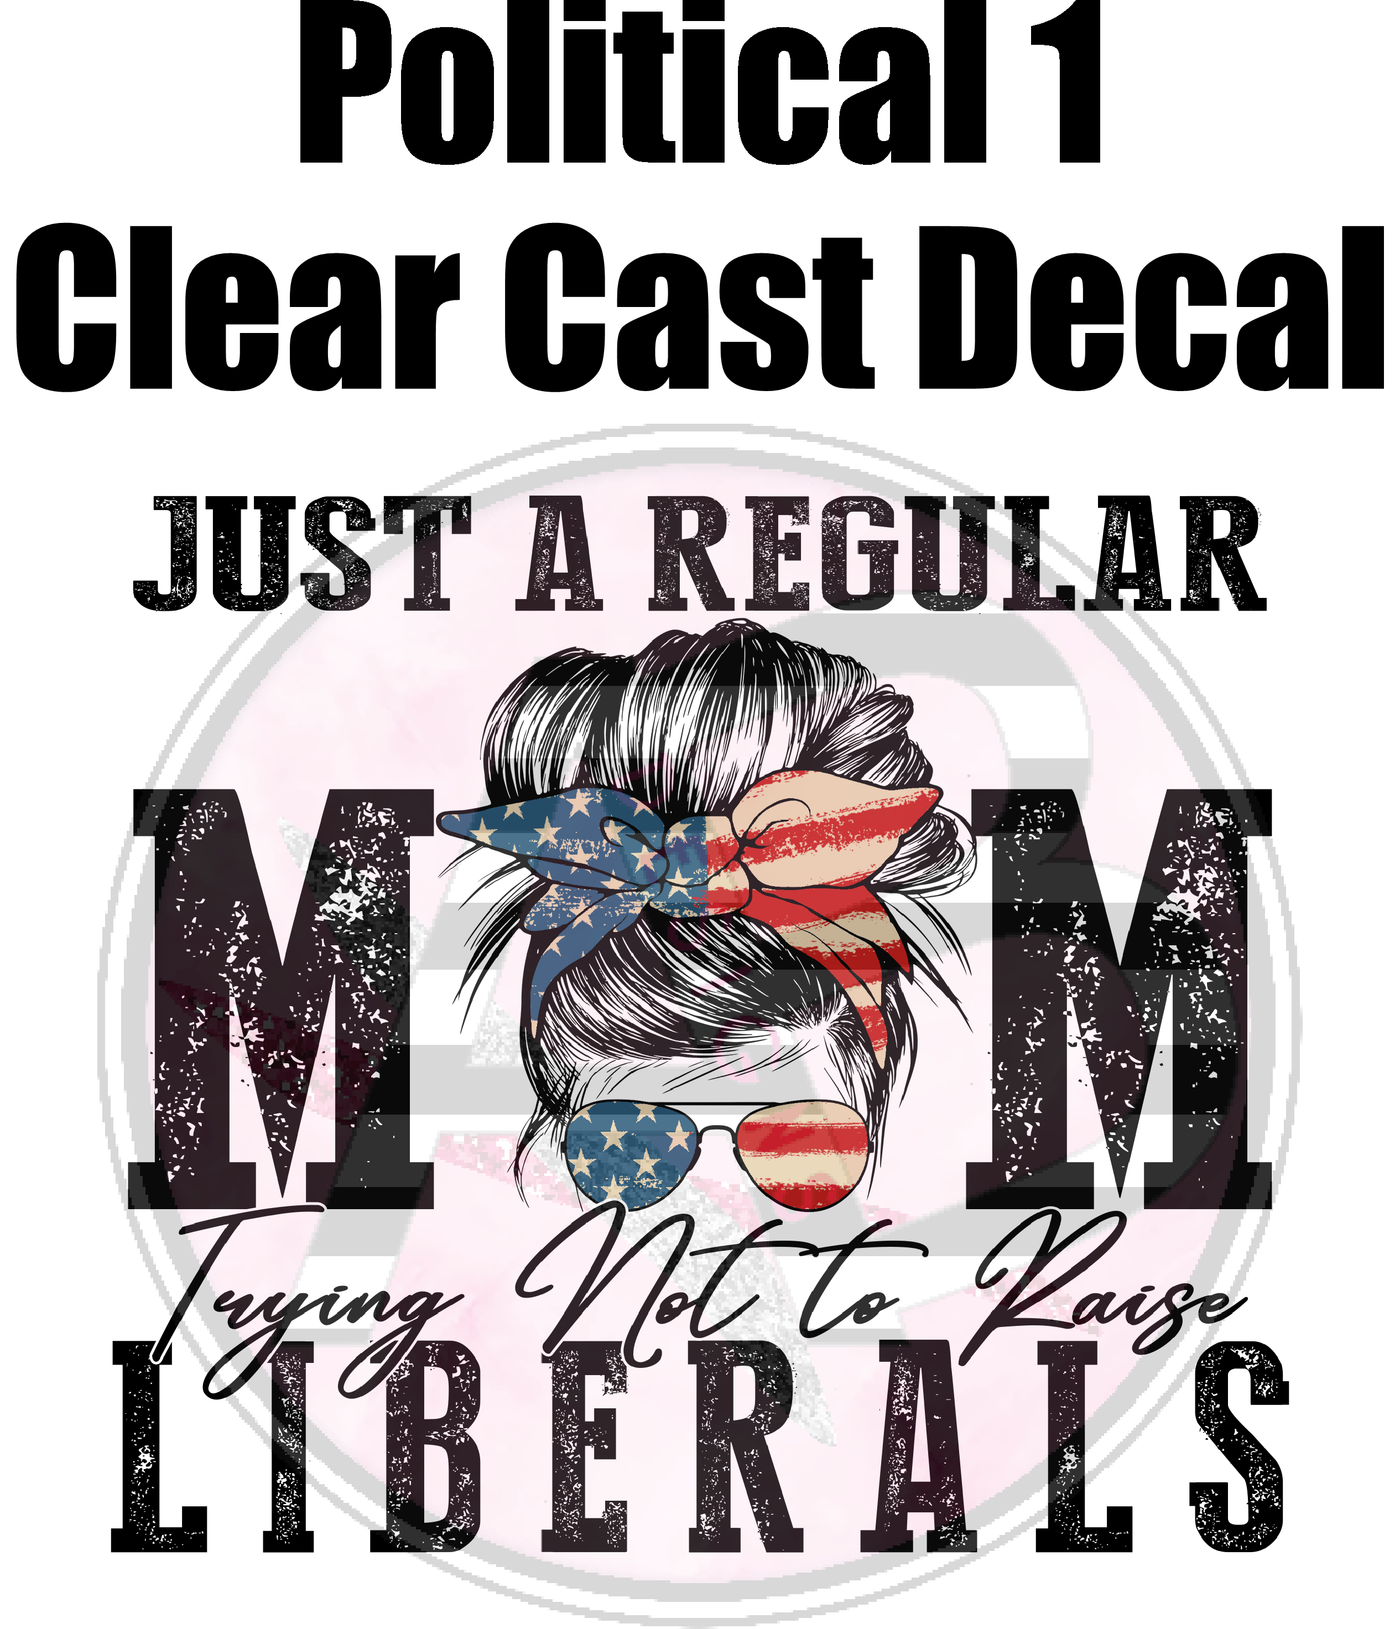 Political 1 - Clear Cast Decal